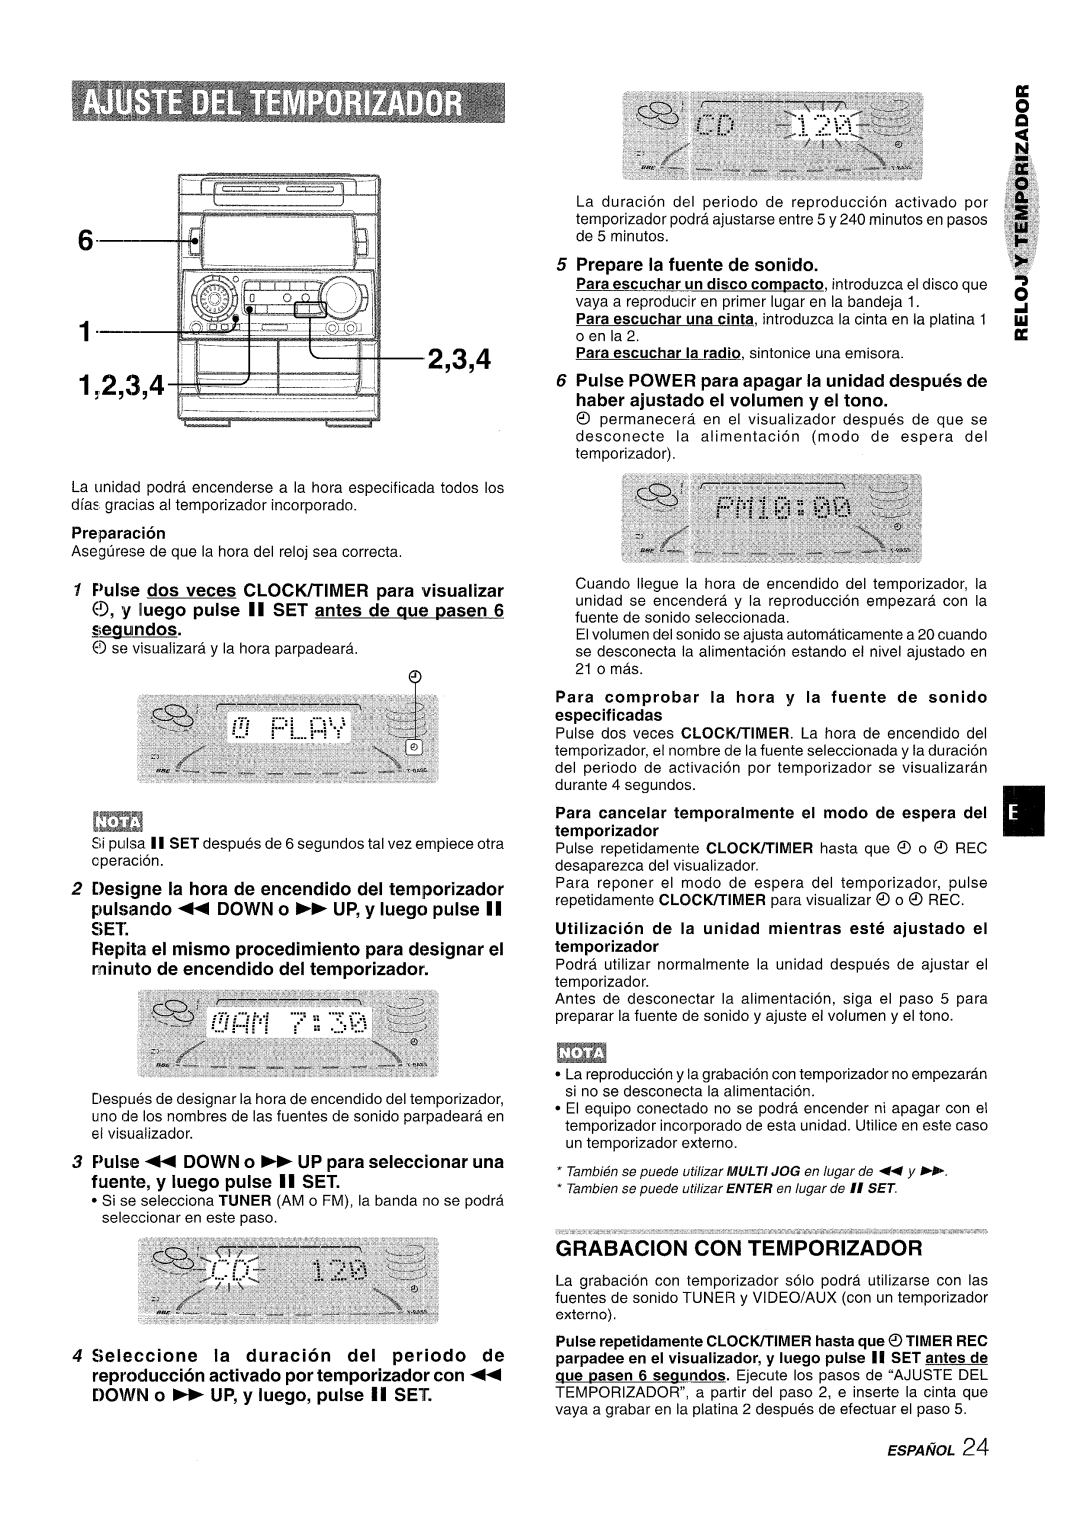 Aiwa NSX-A909 manual 2,3,4, Designe la hors de encendido del temporizador, pukmdo + DOWN o UP, y Iuego pulse SET 